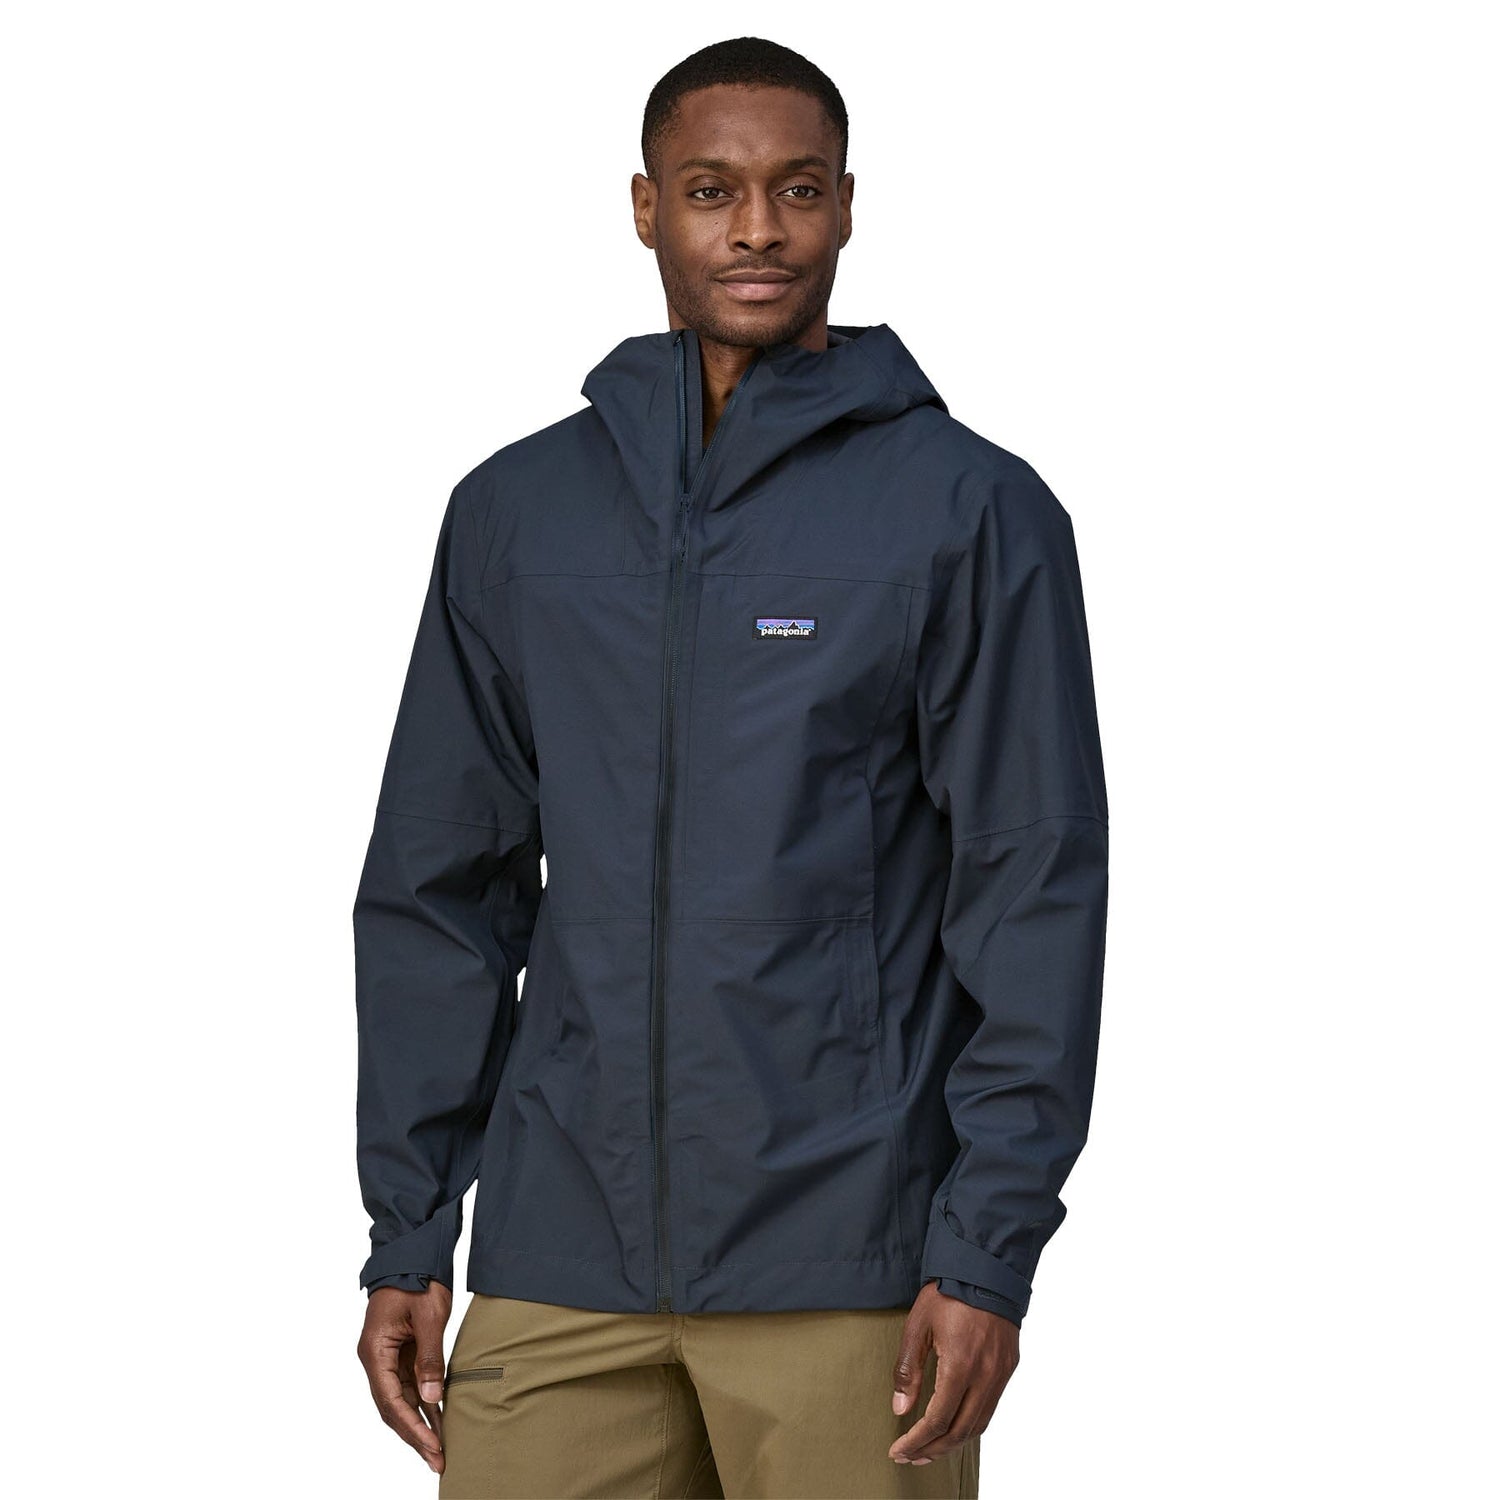 Patagonia - M's Boulder Fork Rain Jacket - Recycled polyester - Weekendbee - sustainable sportswear